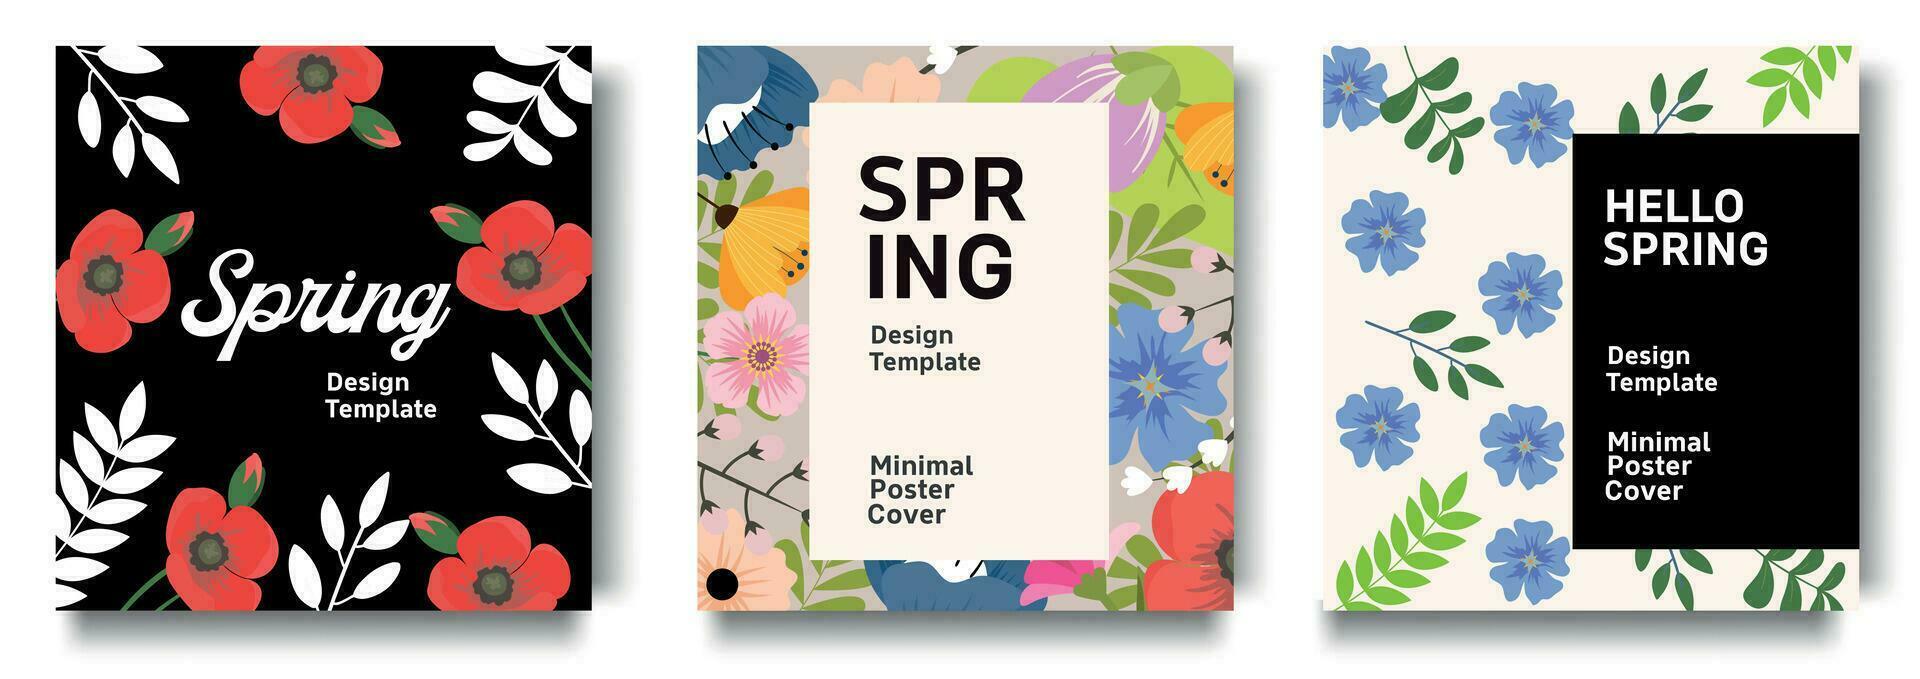 Set template spring season design. Vector illustrations for background, greeting card, party invitation card, website banner, social media banner, marketing material.